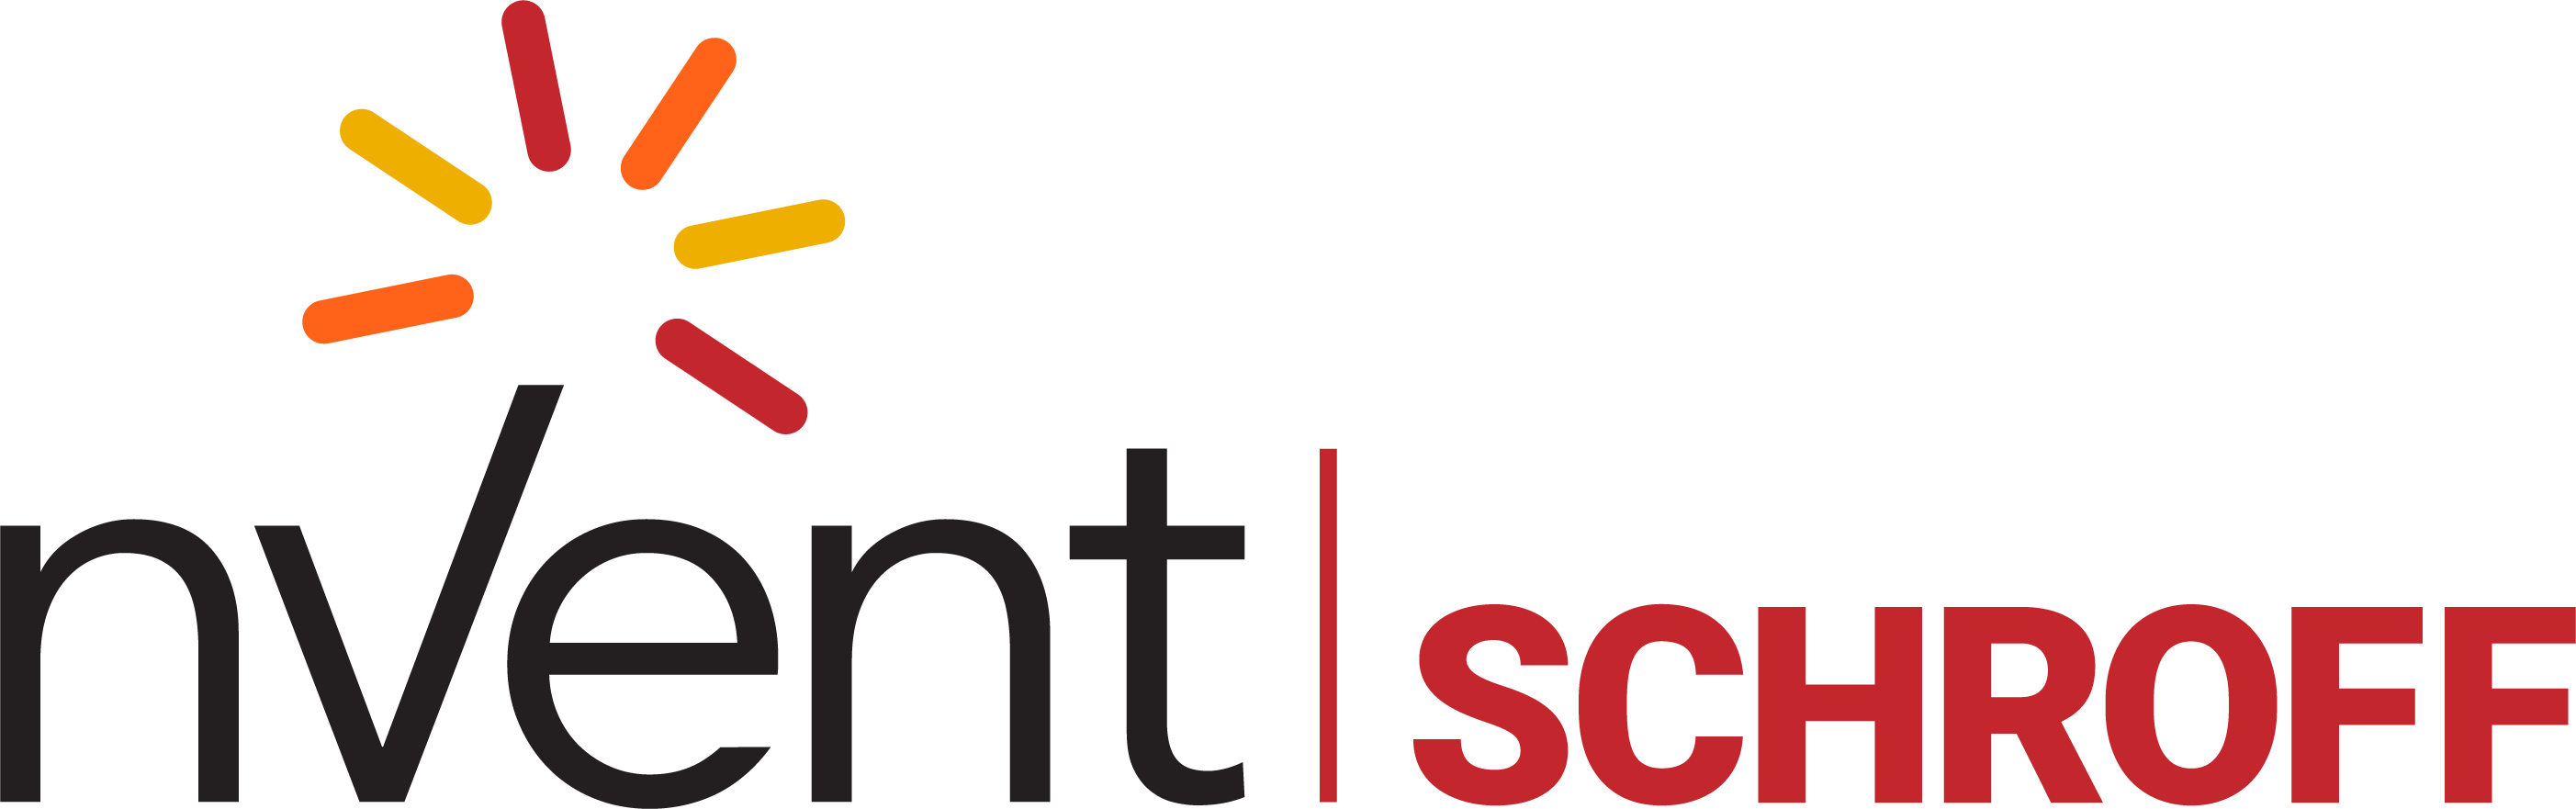 nVent-SCHROFF-Logo-Horizontal